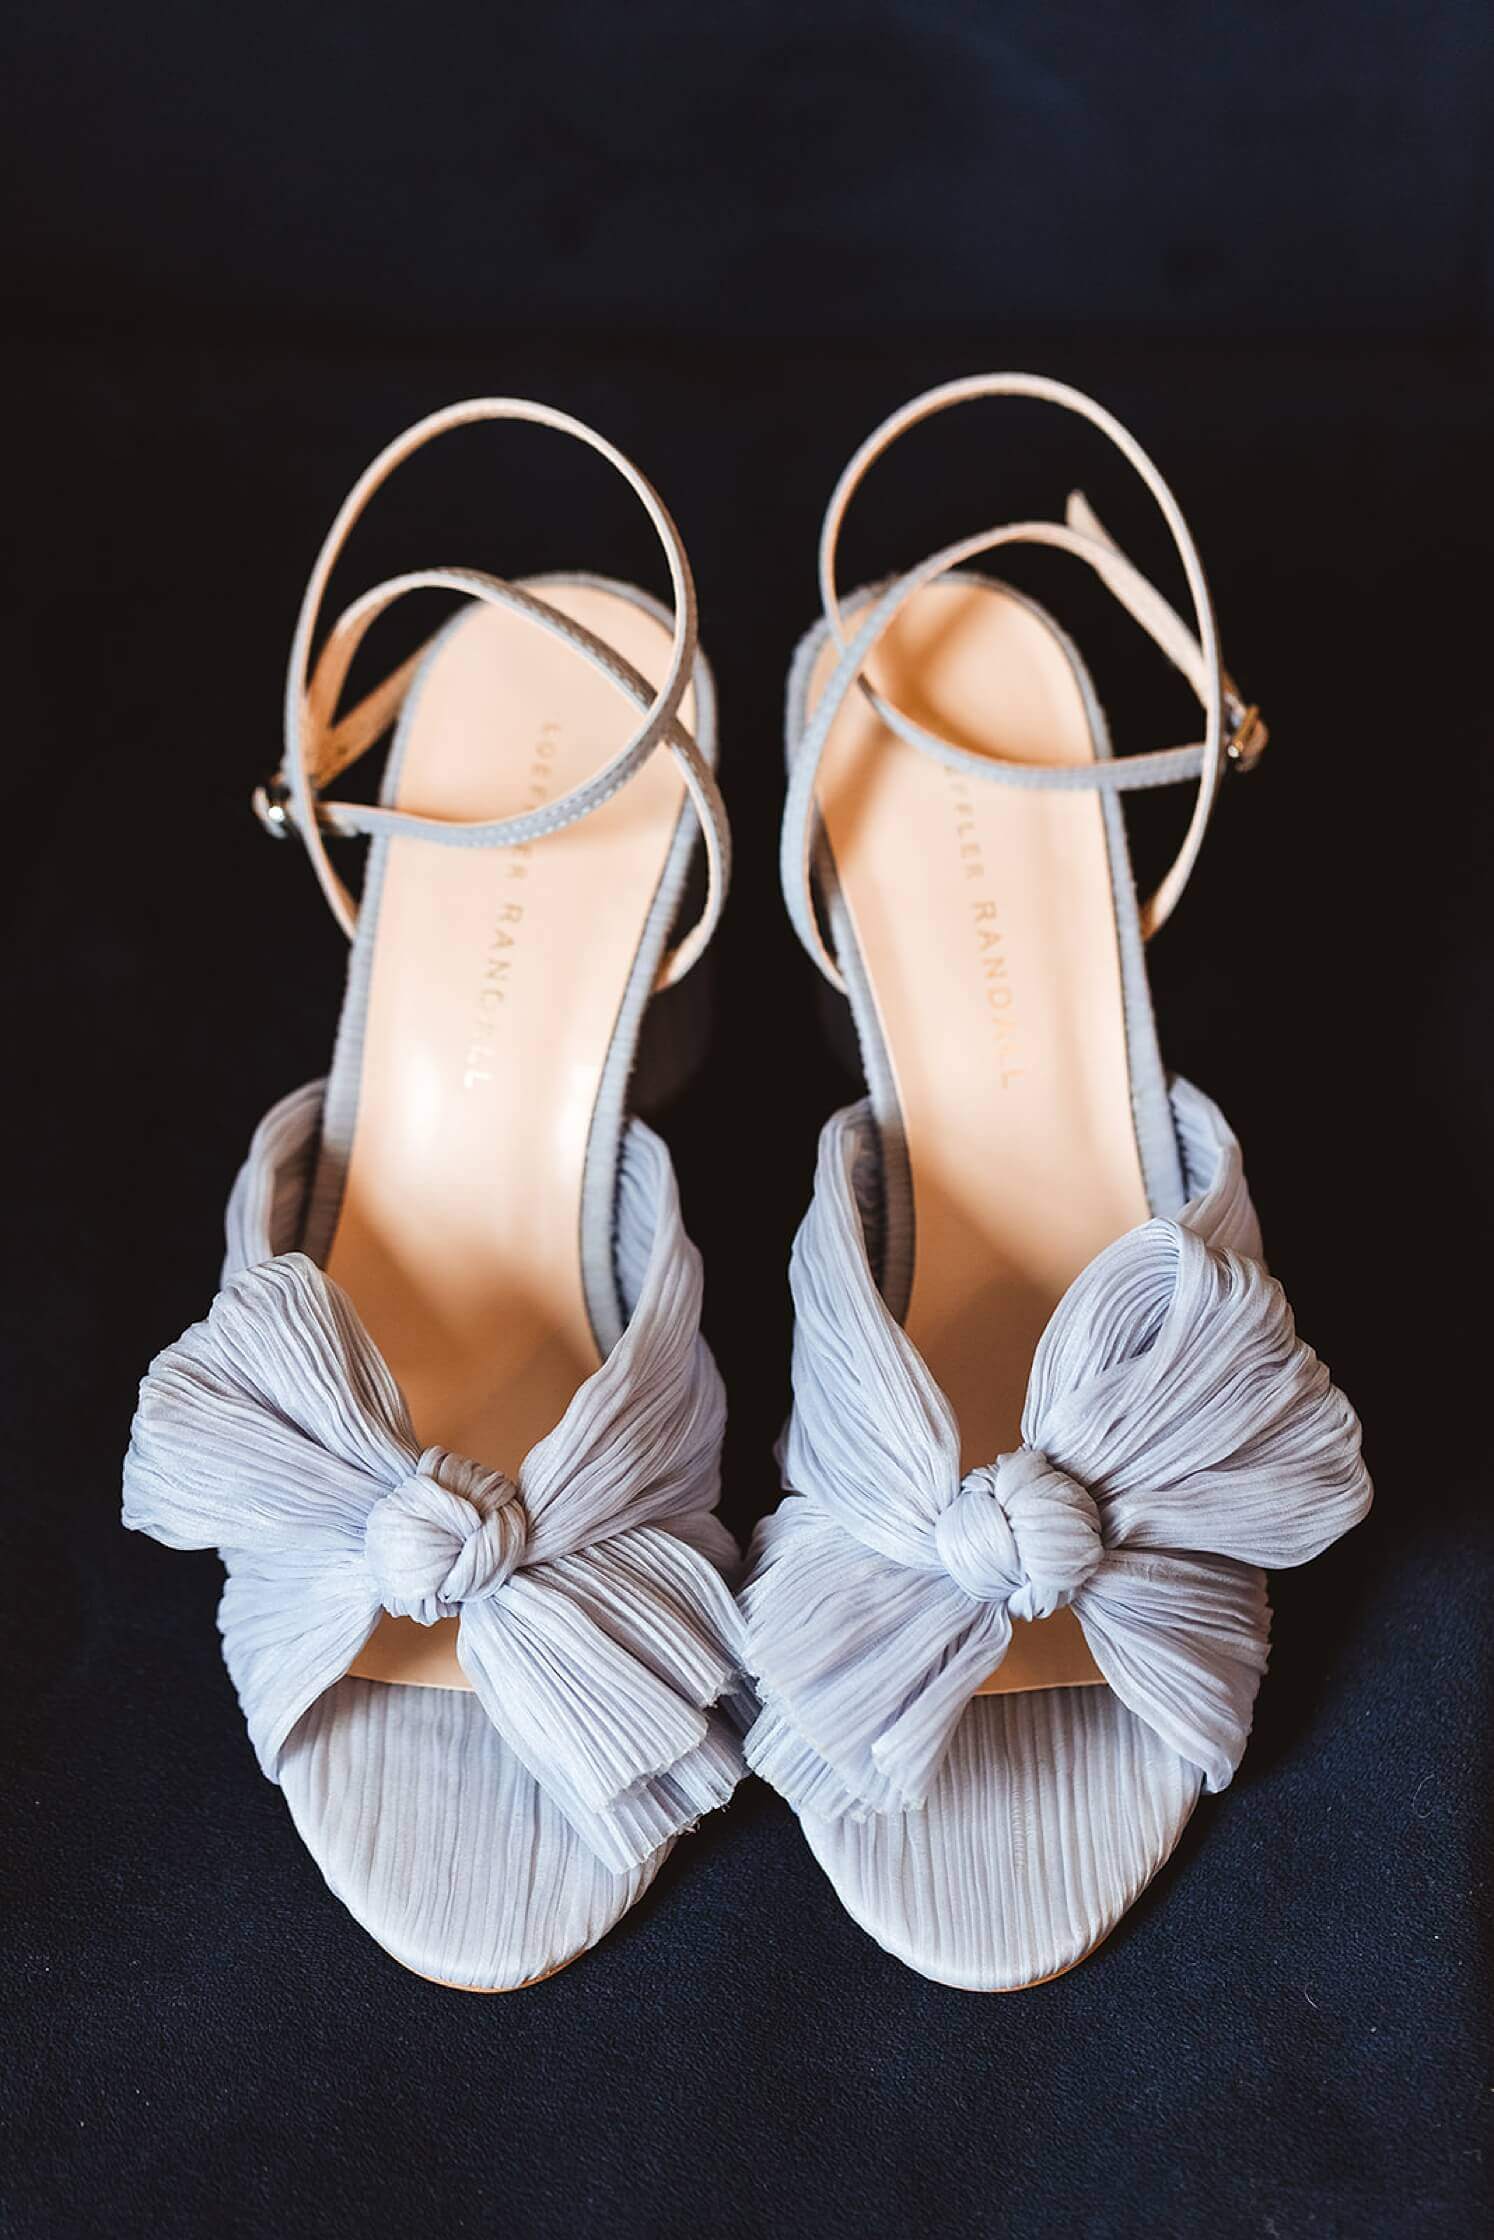 Pale blue bridal shoes with bows